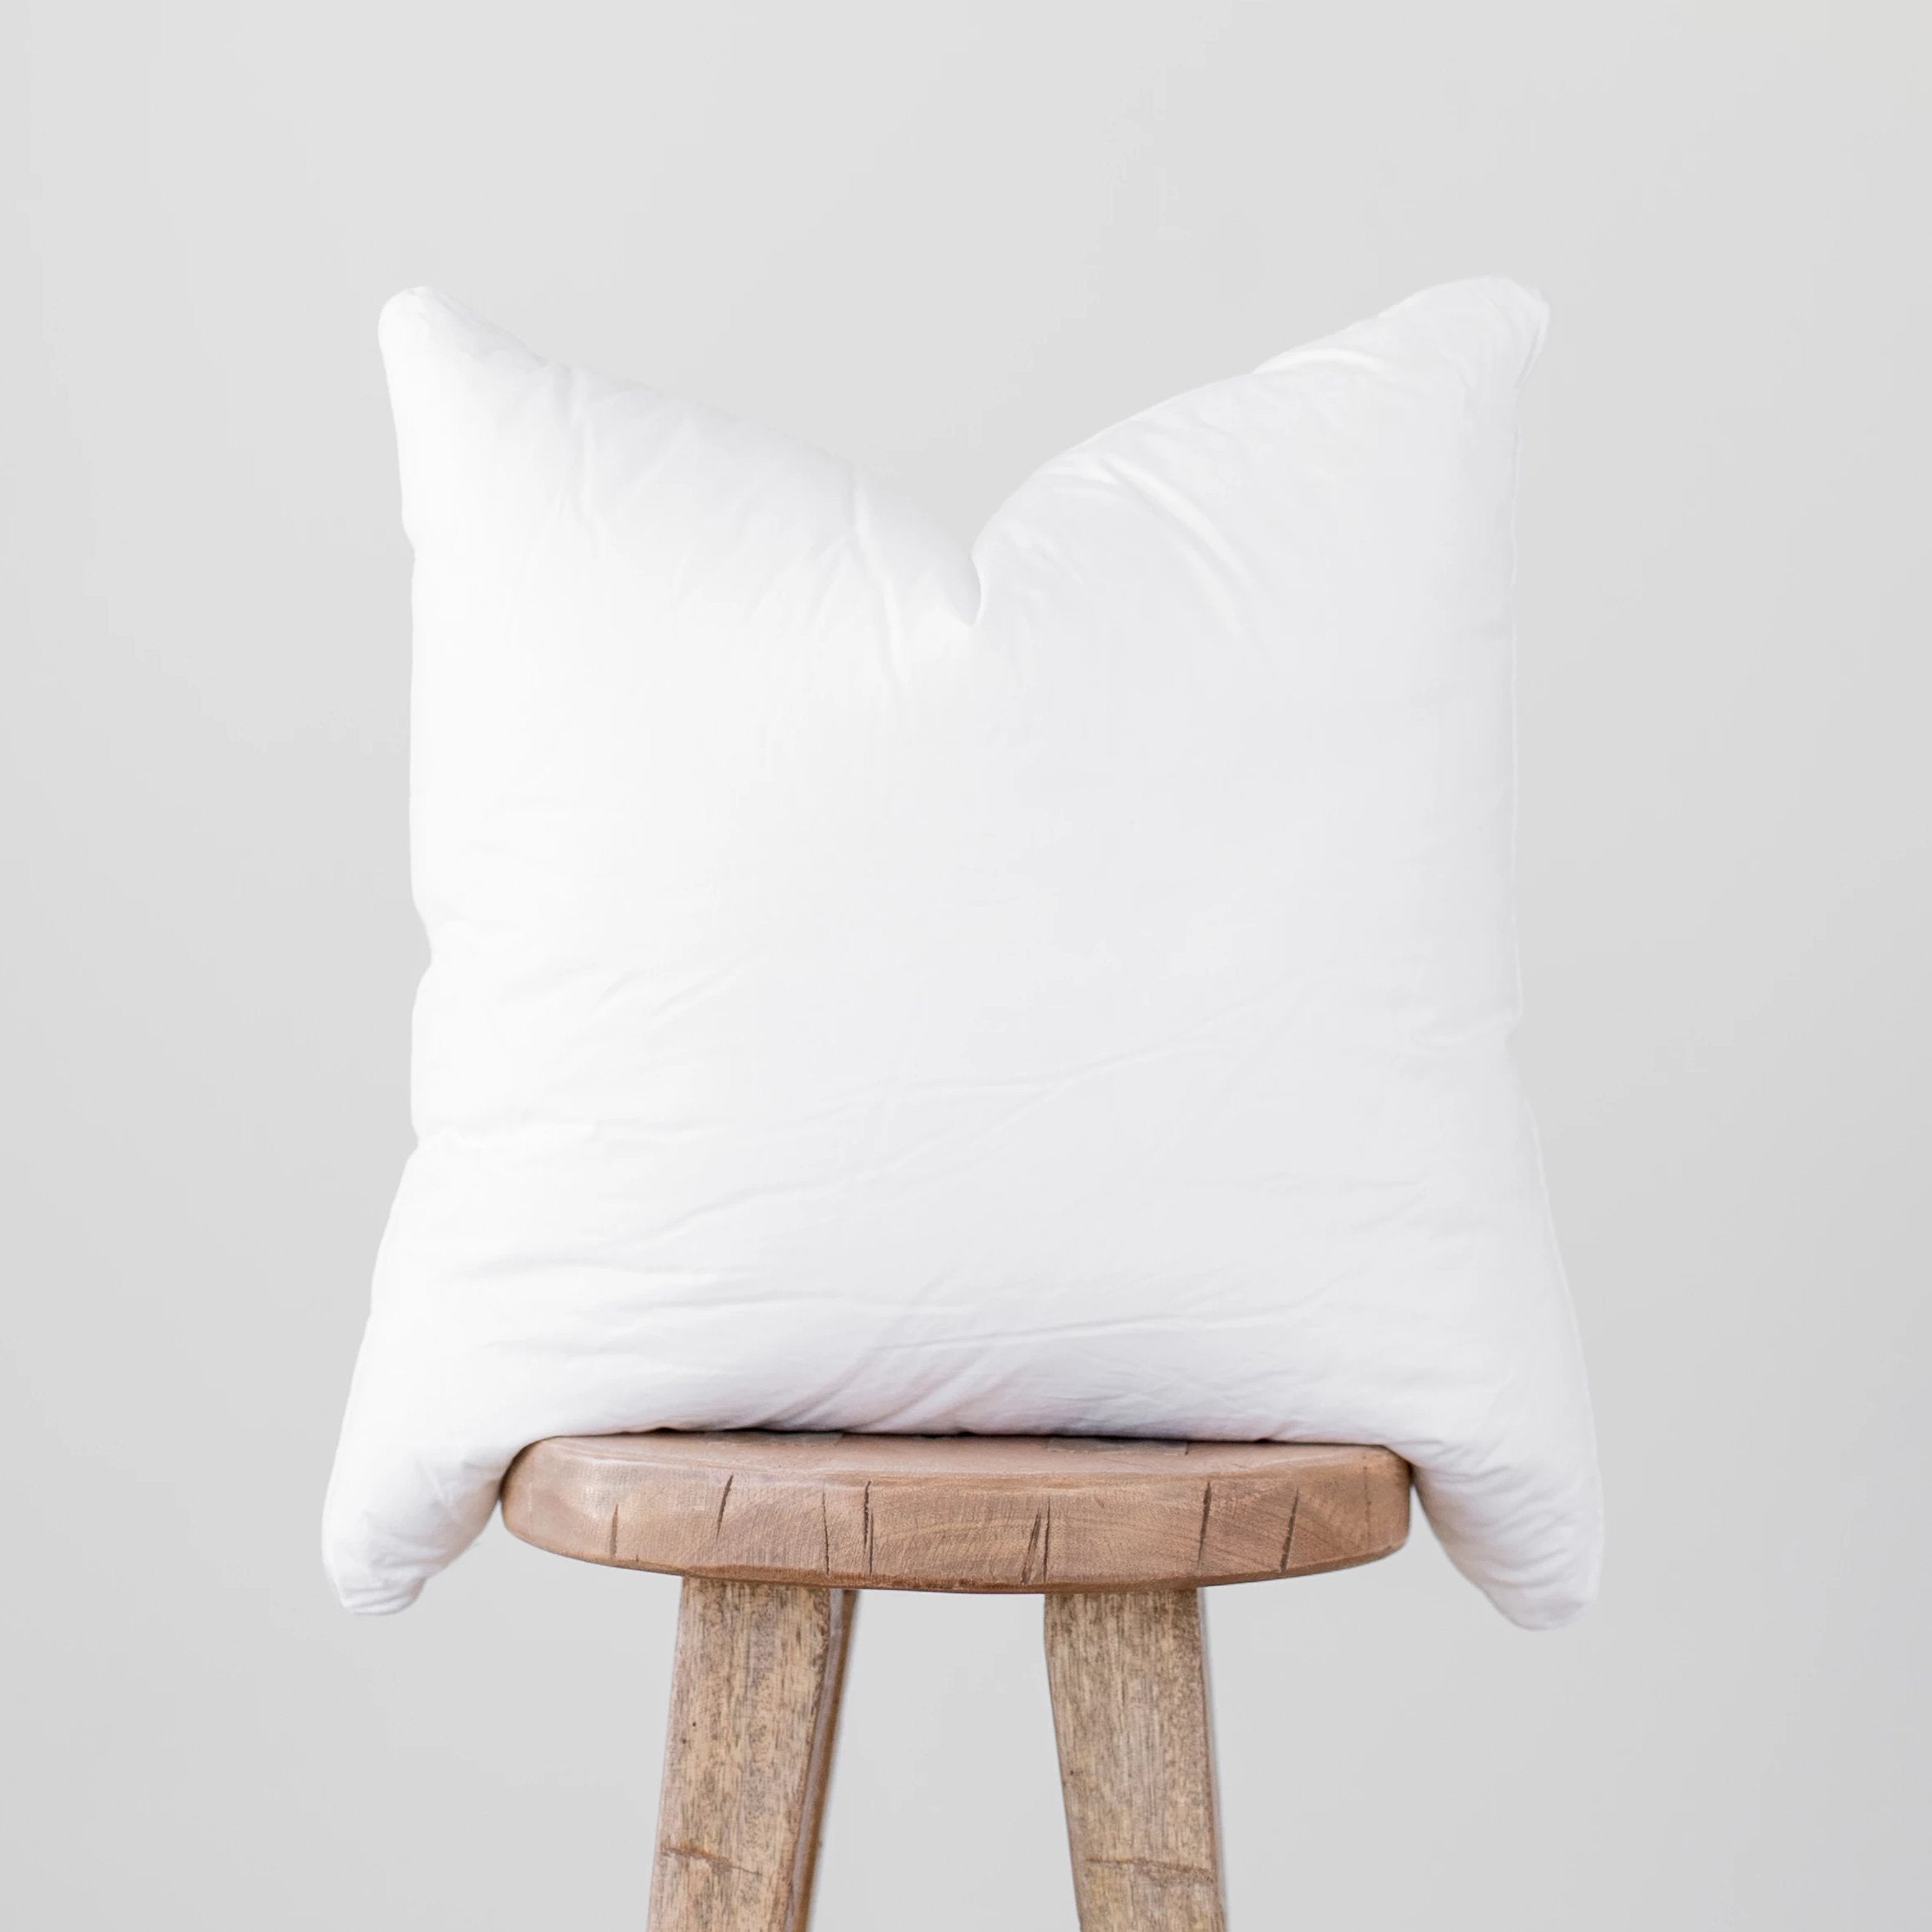 Blank Throw Pillow Insert – Joy of Randomness